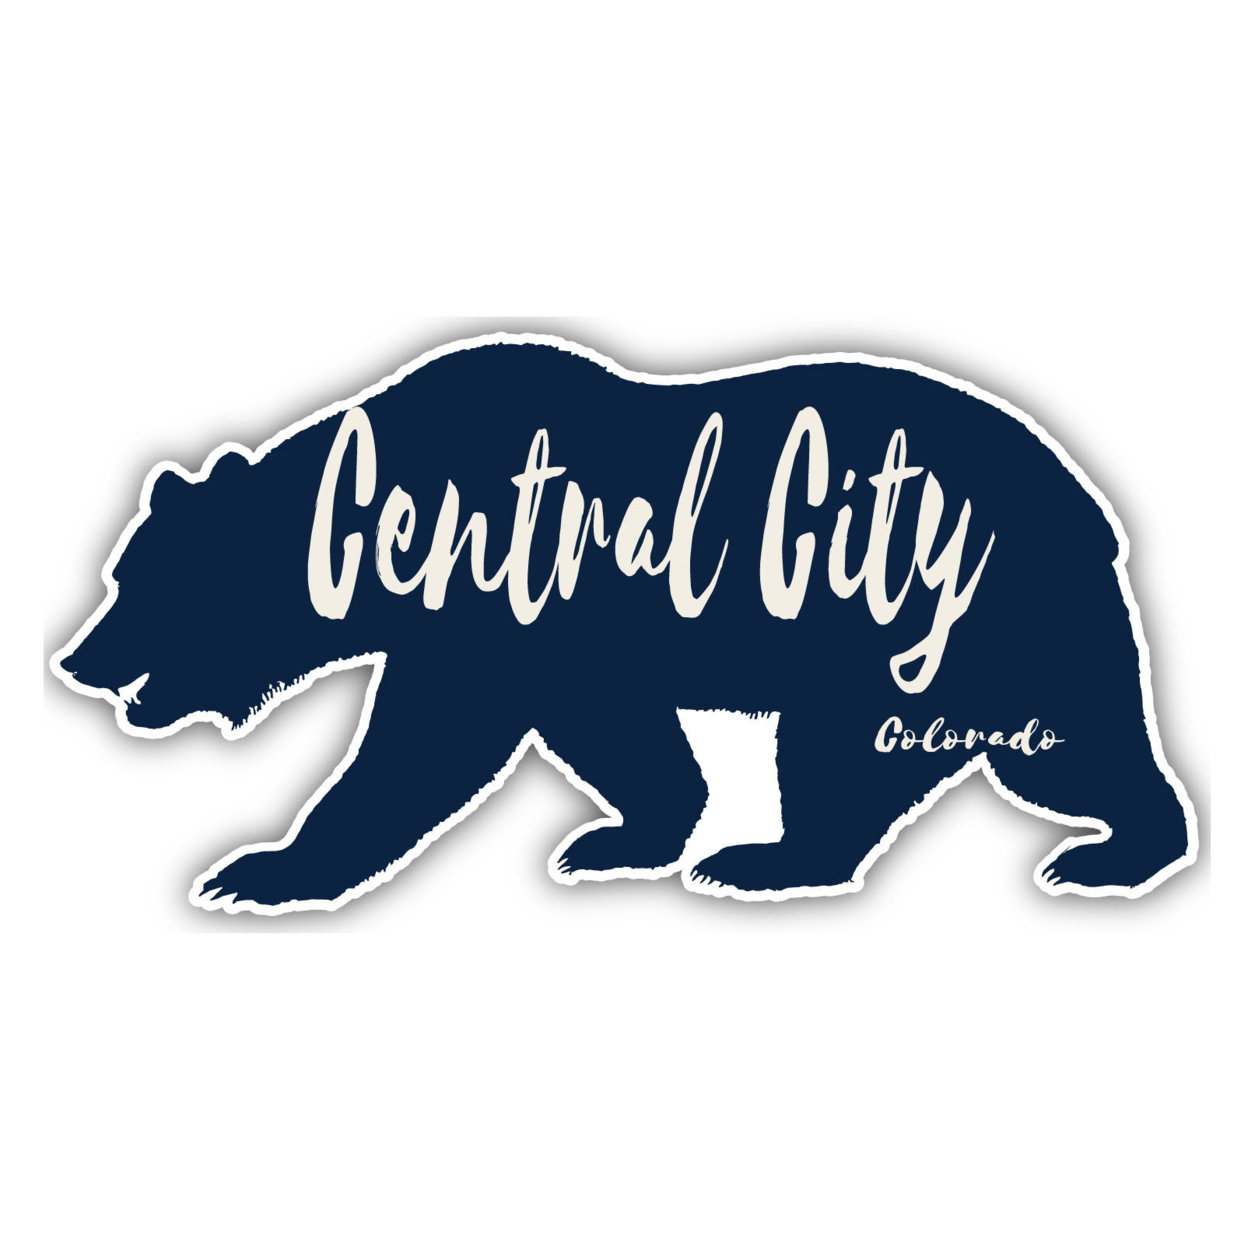 Central City Colorado Souvenir Decorative Stickers (Choose Theme And Size) - Single Unit, 6-Inch, Tent